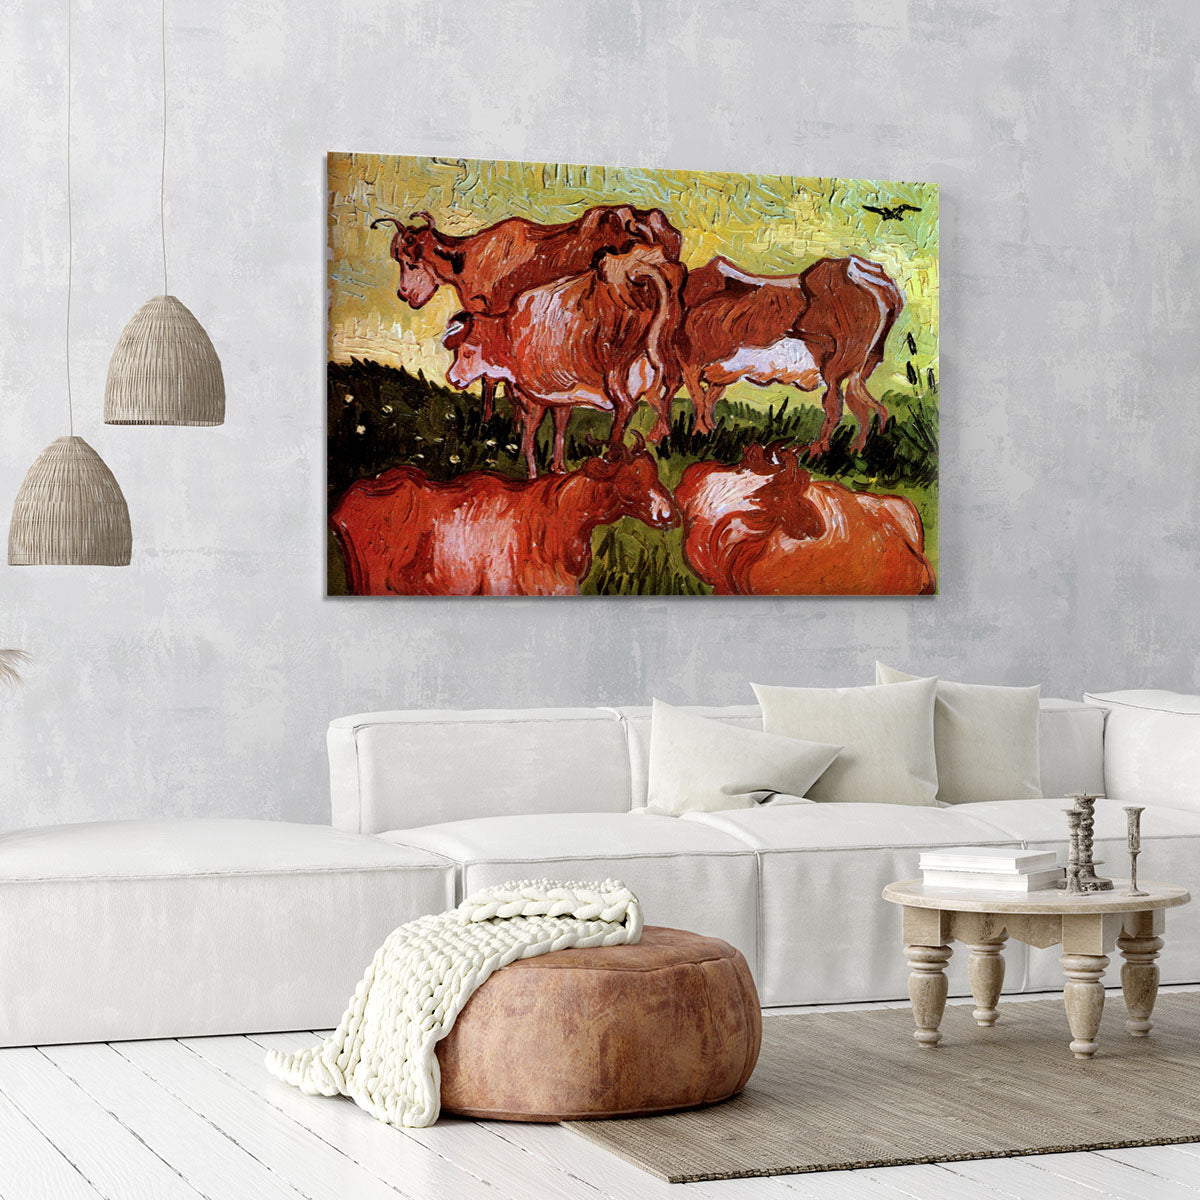 Cows after Jordaens by Van Gogh Canvas Print or Poster - Canvas Art Rocks - 6